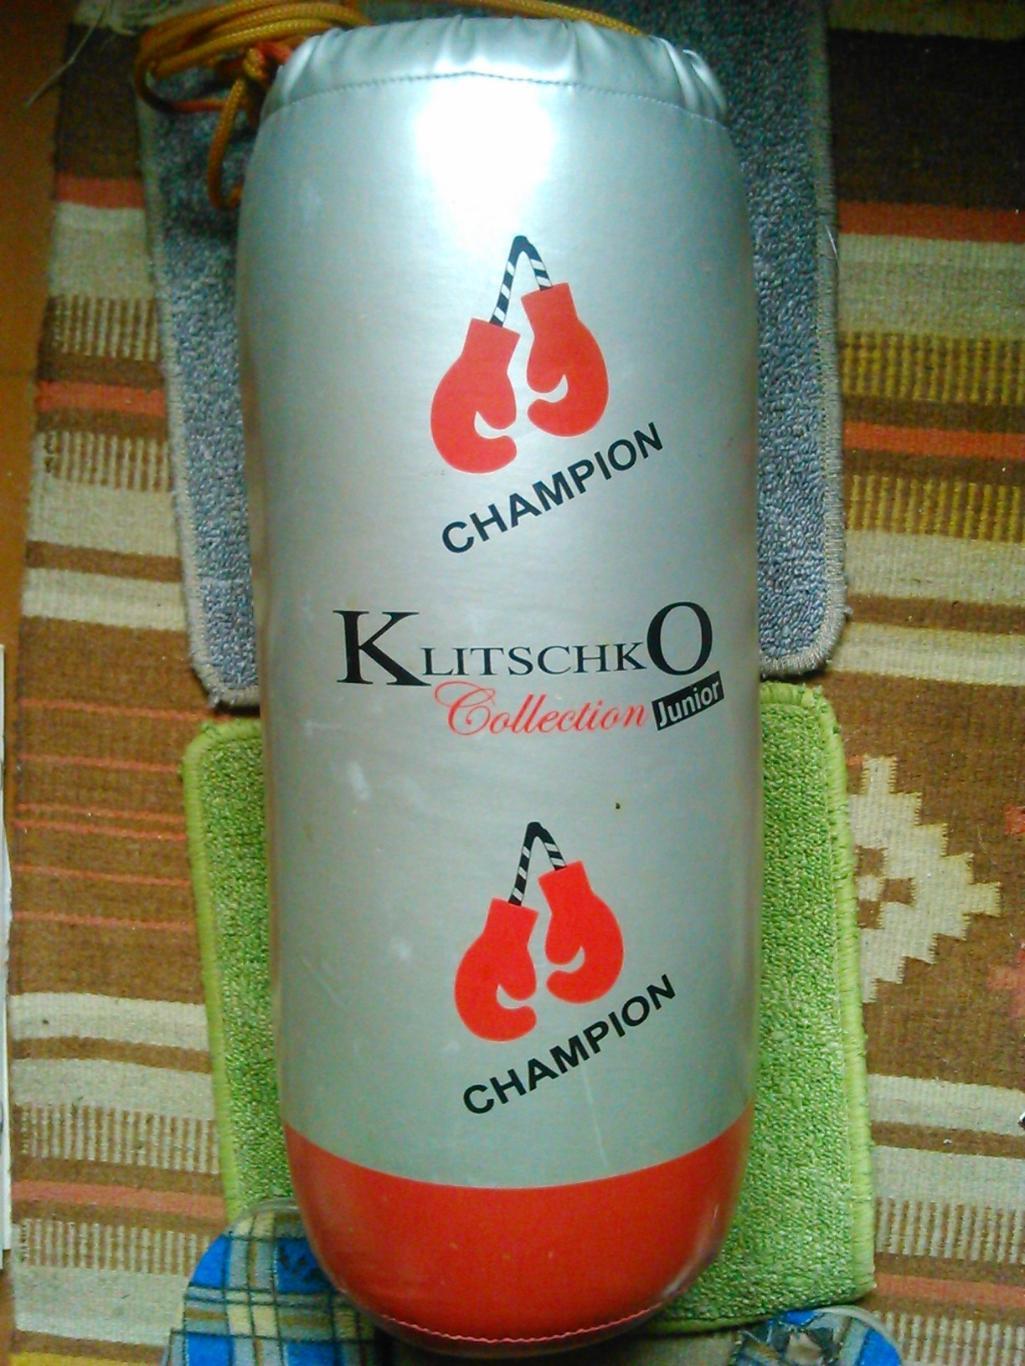 Боксёрская груша CHAMPION KlitschkO Collection Junior. Оптом скидки до 45%!